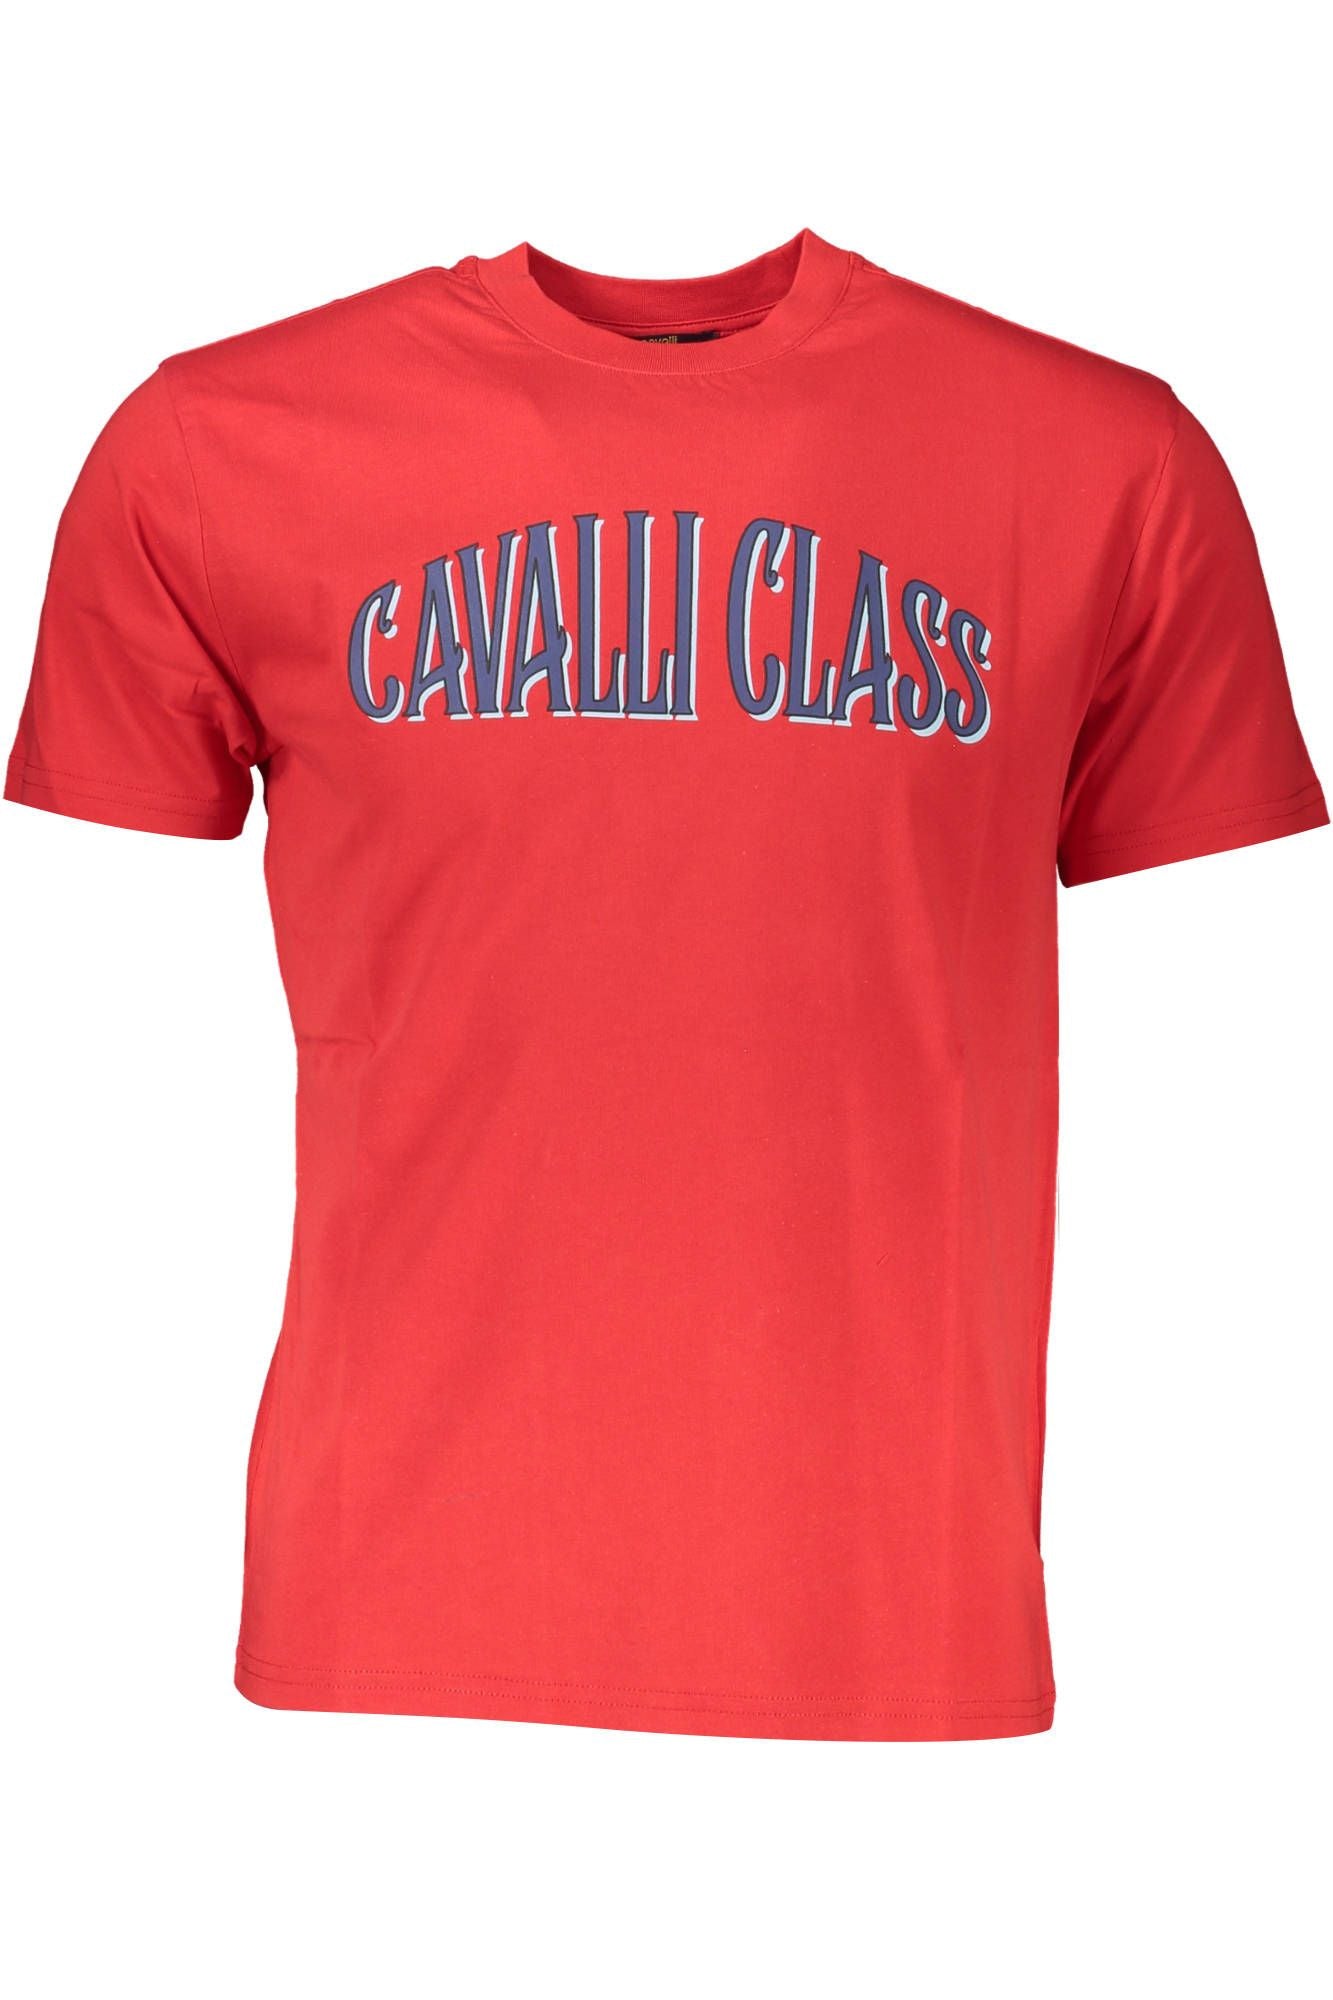 Cavalli Class Elegant Red Printed Logo Tee